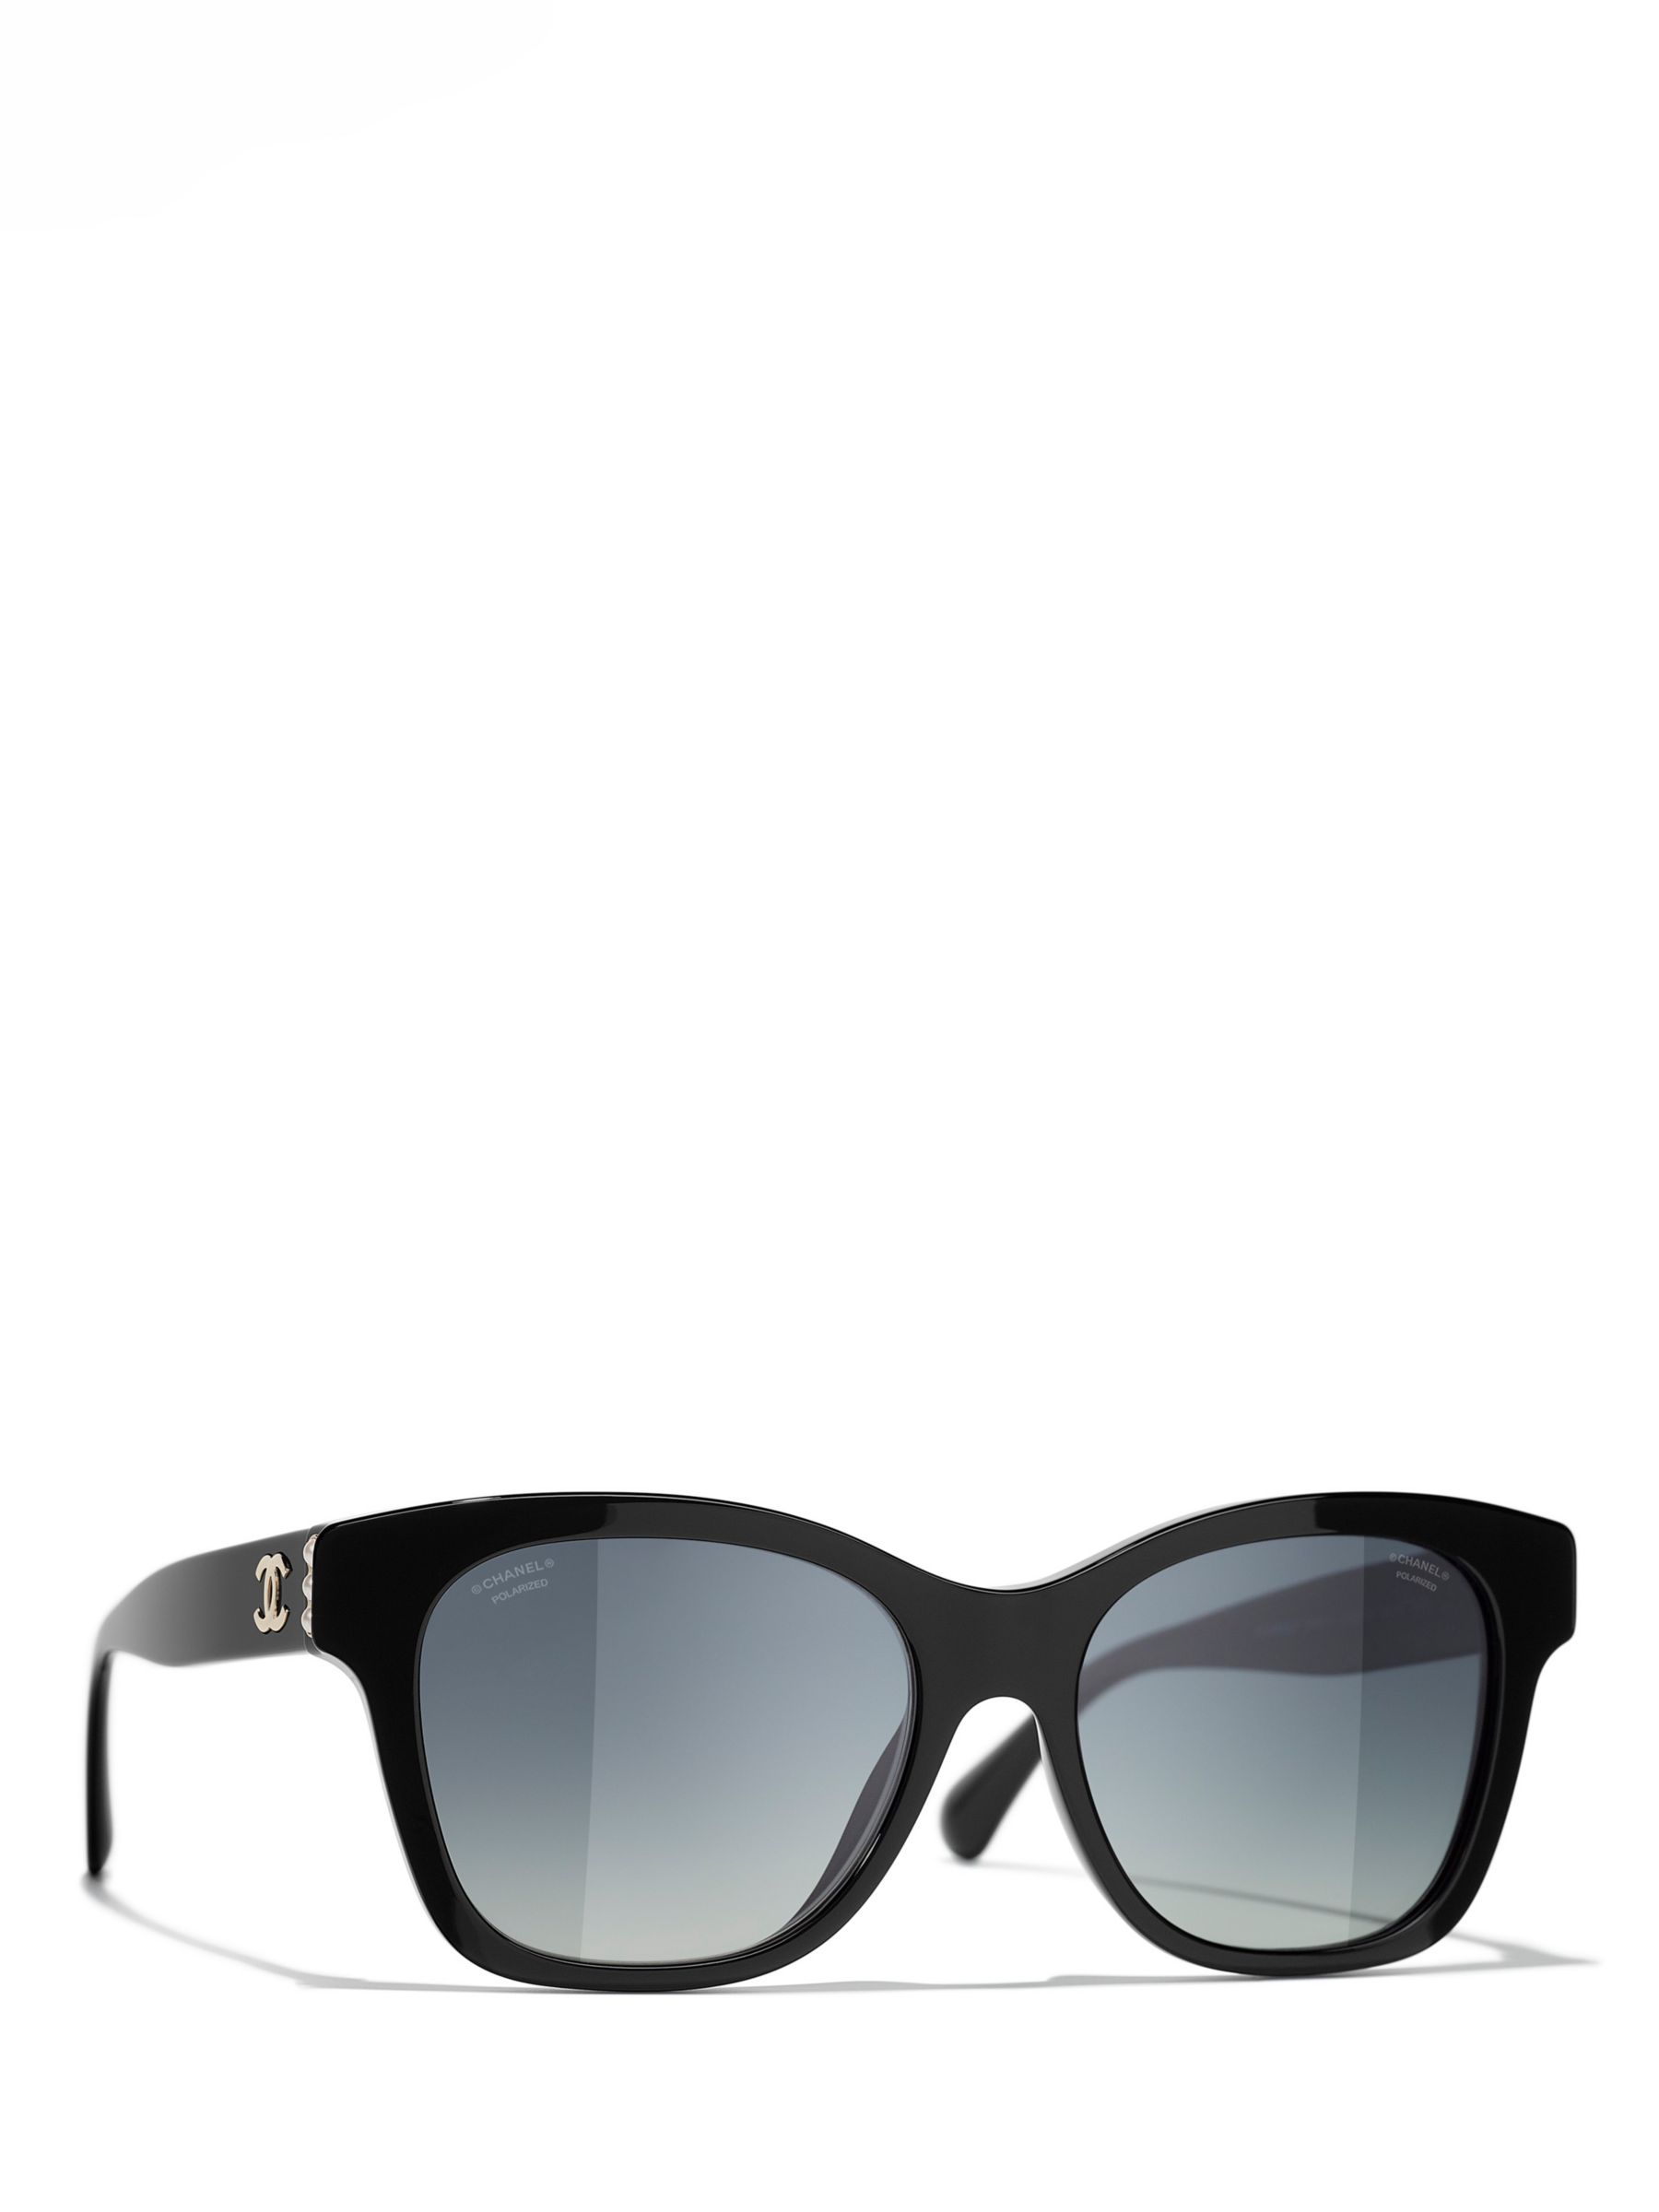 CHANEL Rectangular Sunglasses CH5482H Black/Grey Gradient at John